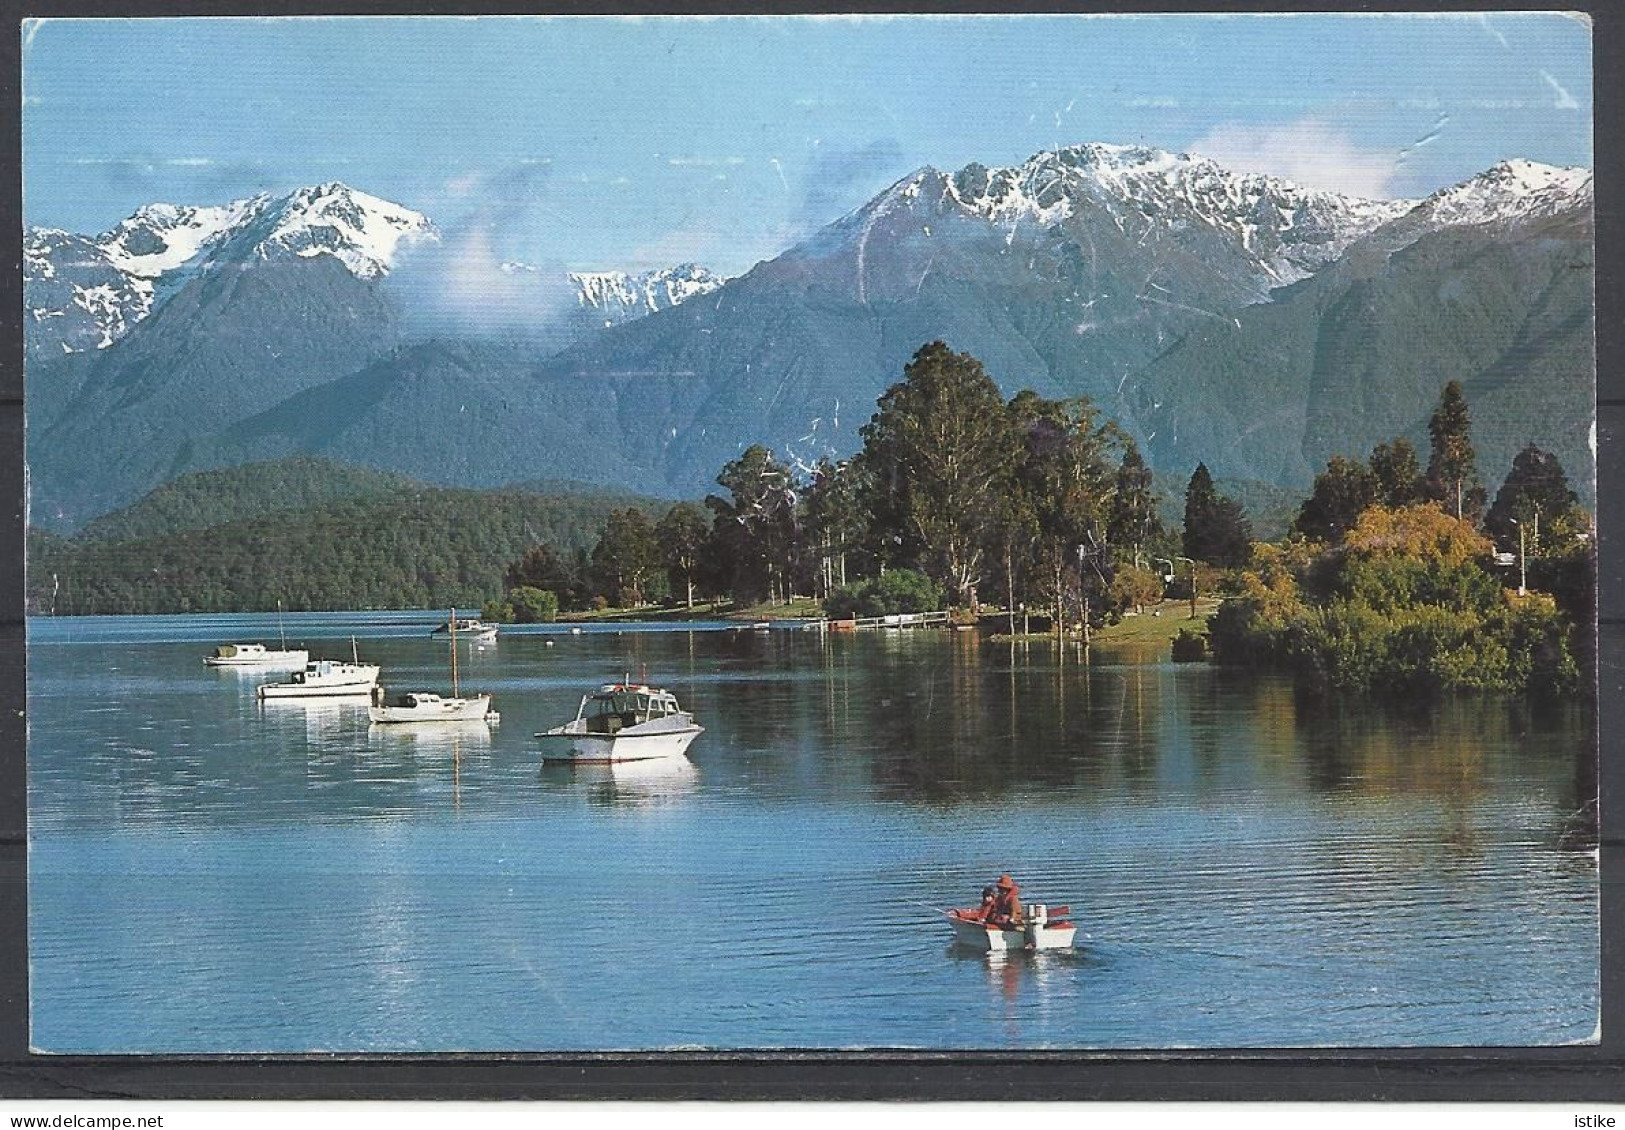 New Zealand, Lake Te Anau, Nice Stamp, Airmail Label,1987. - Nouvelle-Zélande